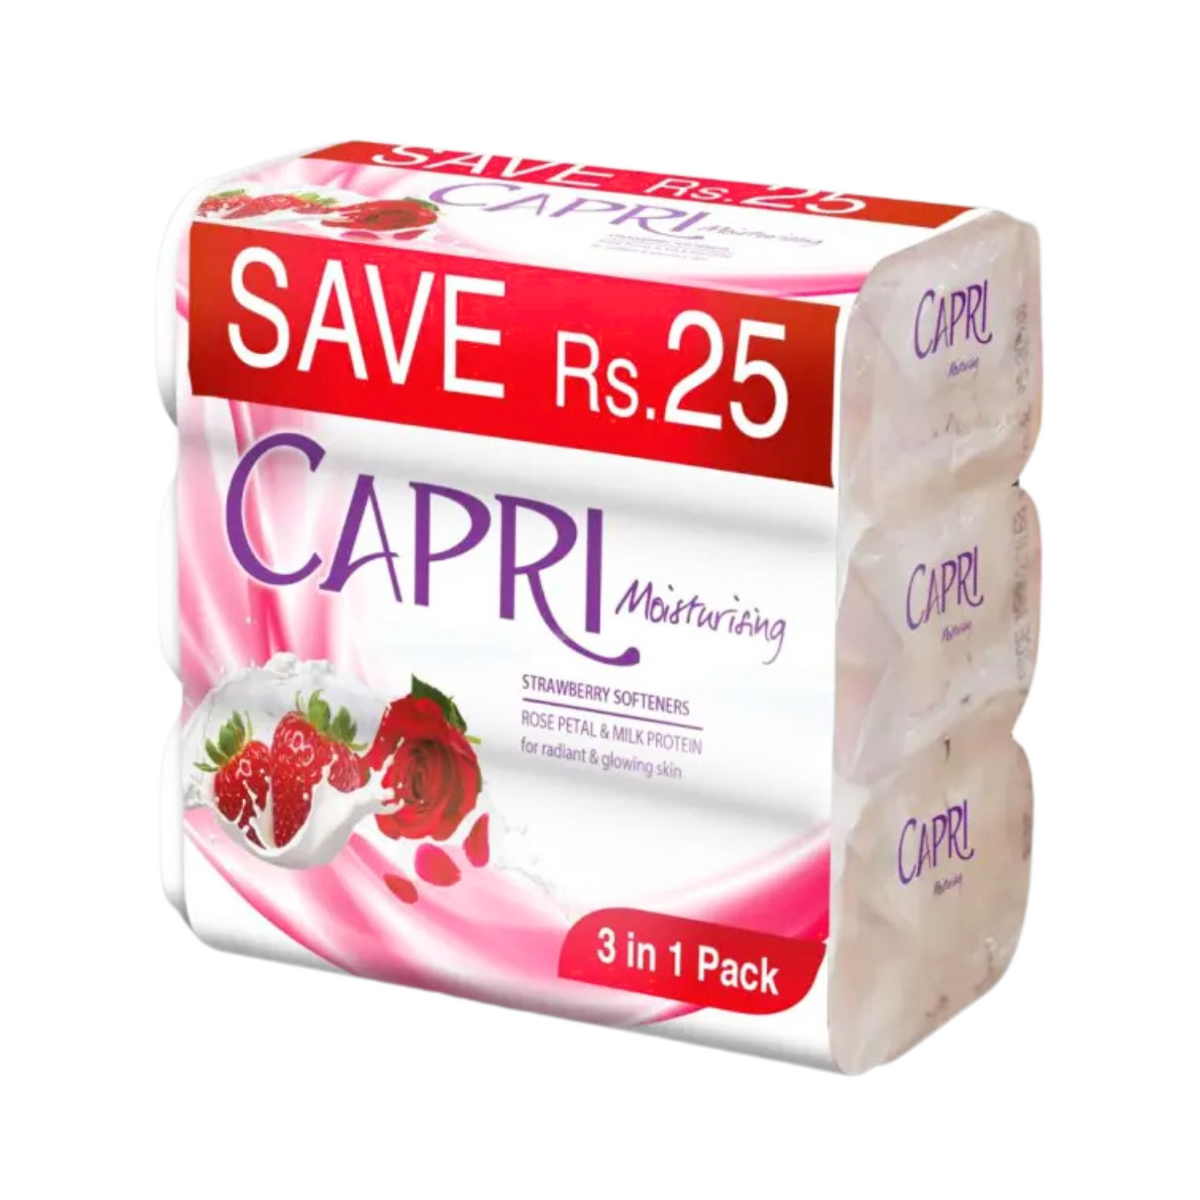 capri-strawberry-softeners-soap-3-in-1-120g